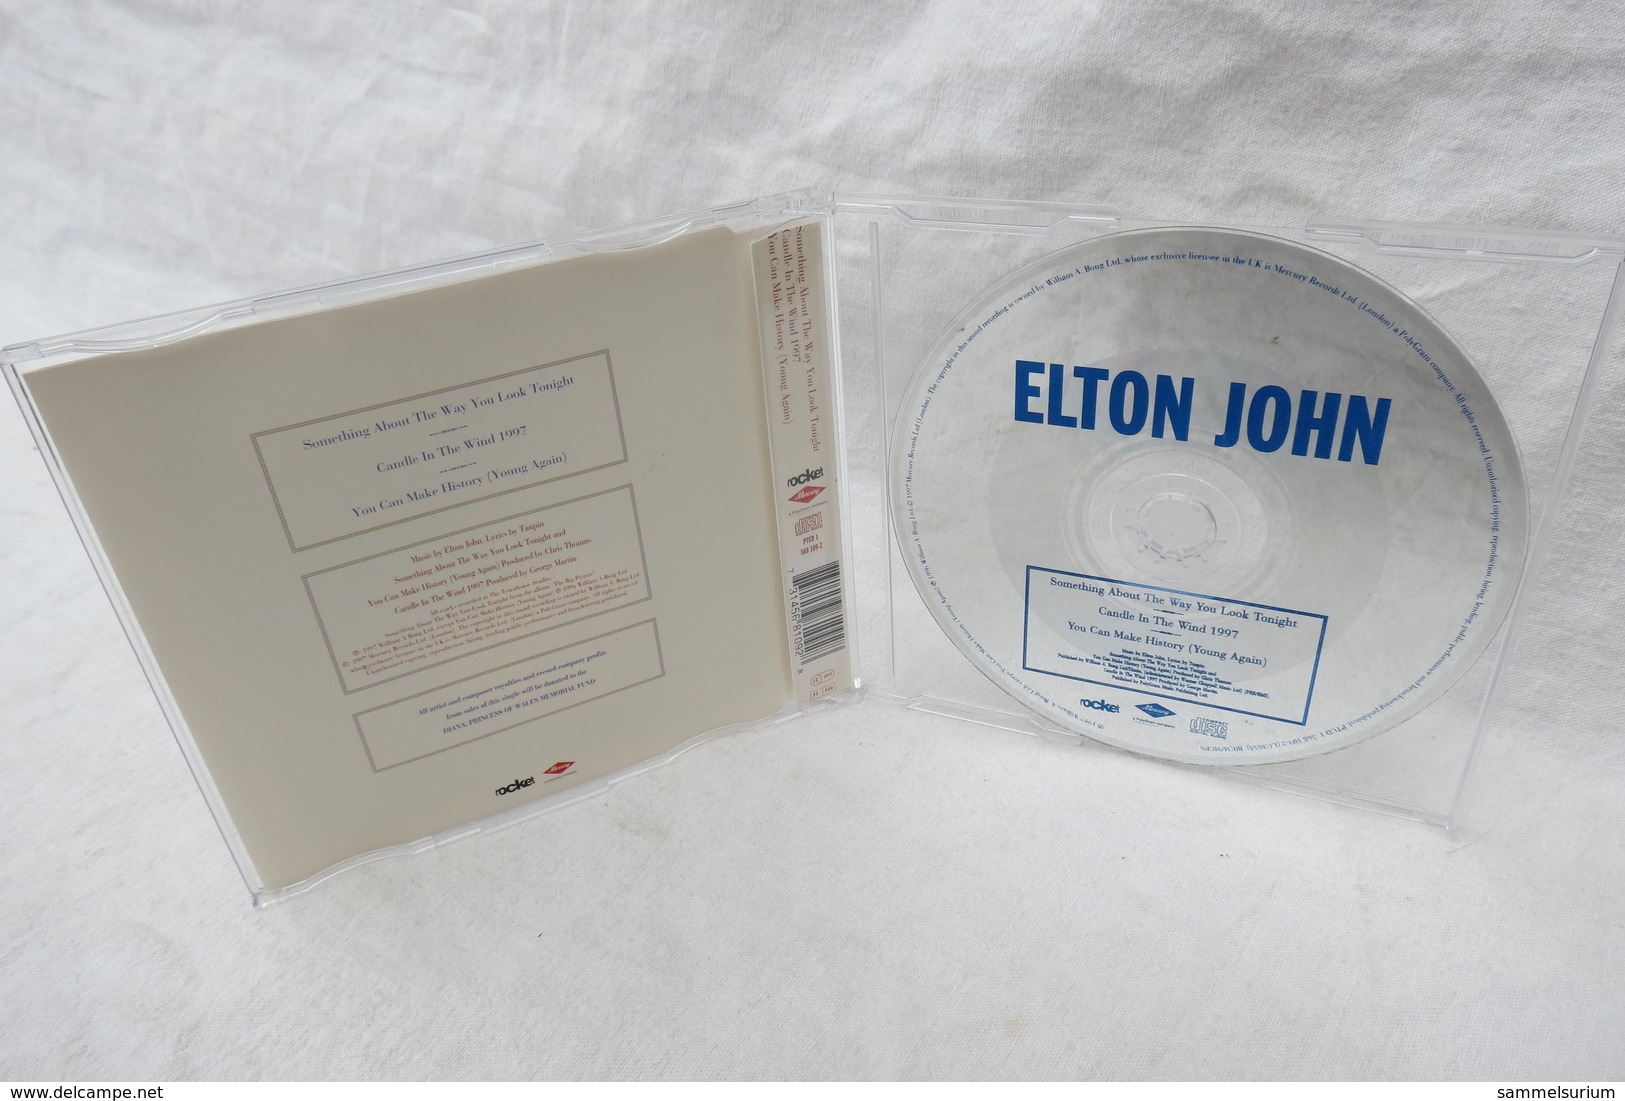 Maxi CD "Elton John" Candle In The Wind - Disco & Pop